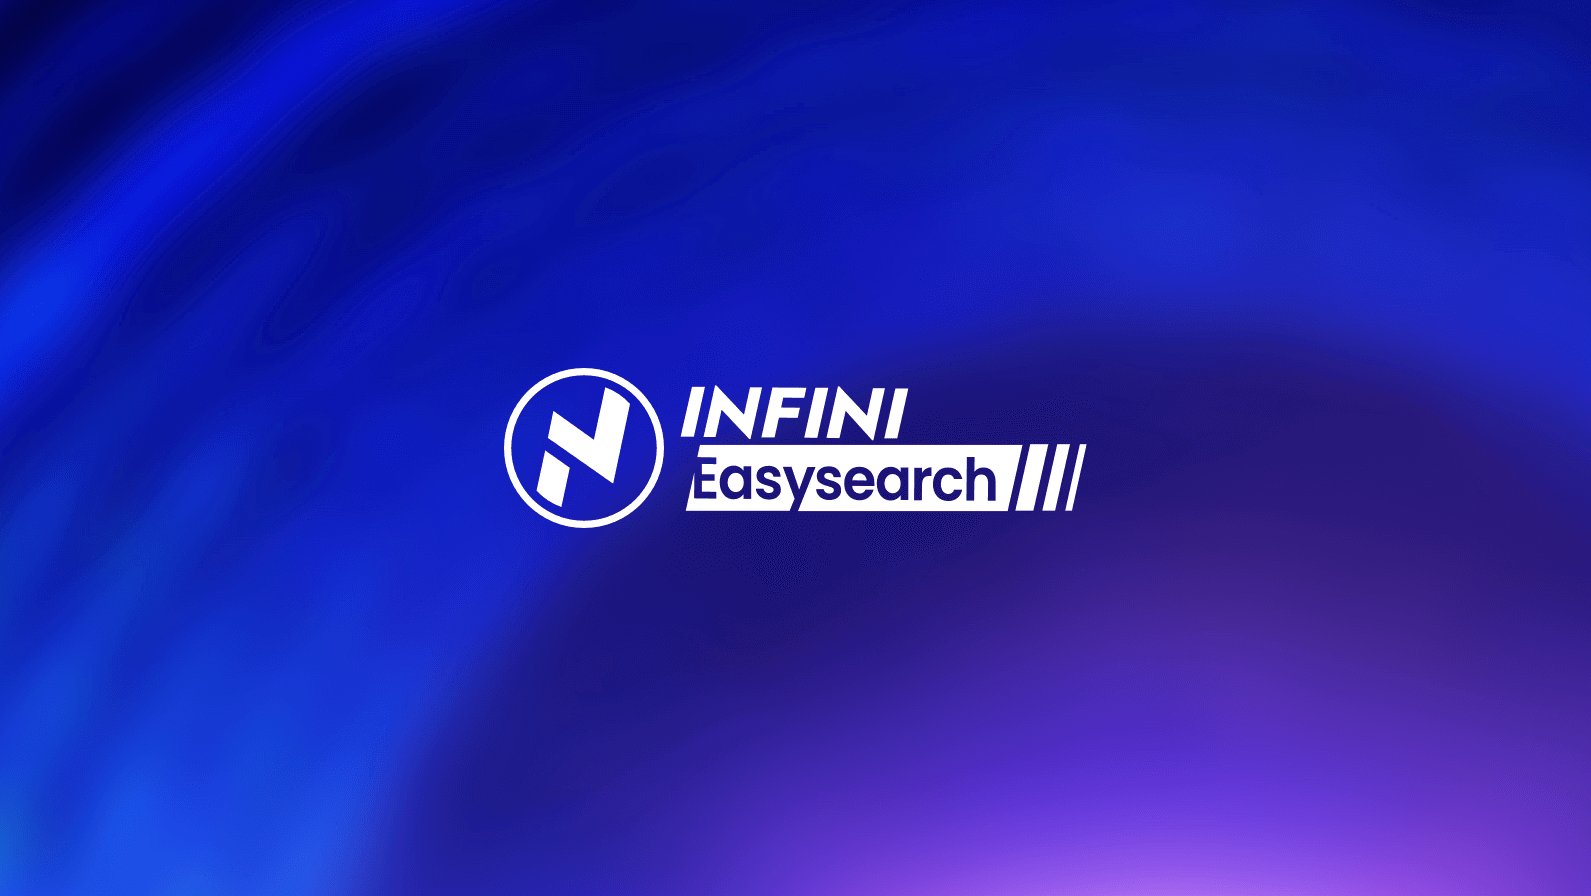 【INFINI Workshop 深圳站】8 月 31 日一起动手实验玩转 Easysearch